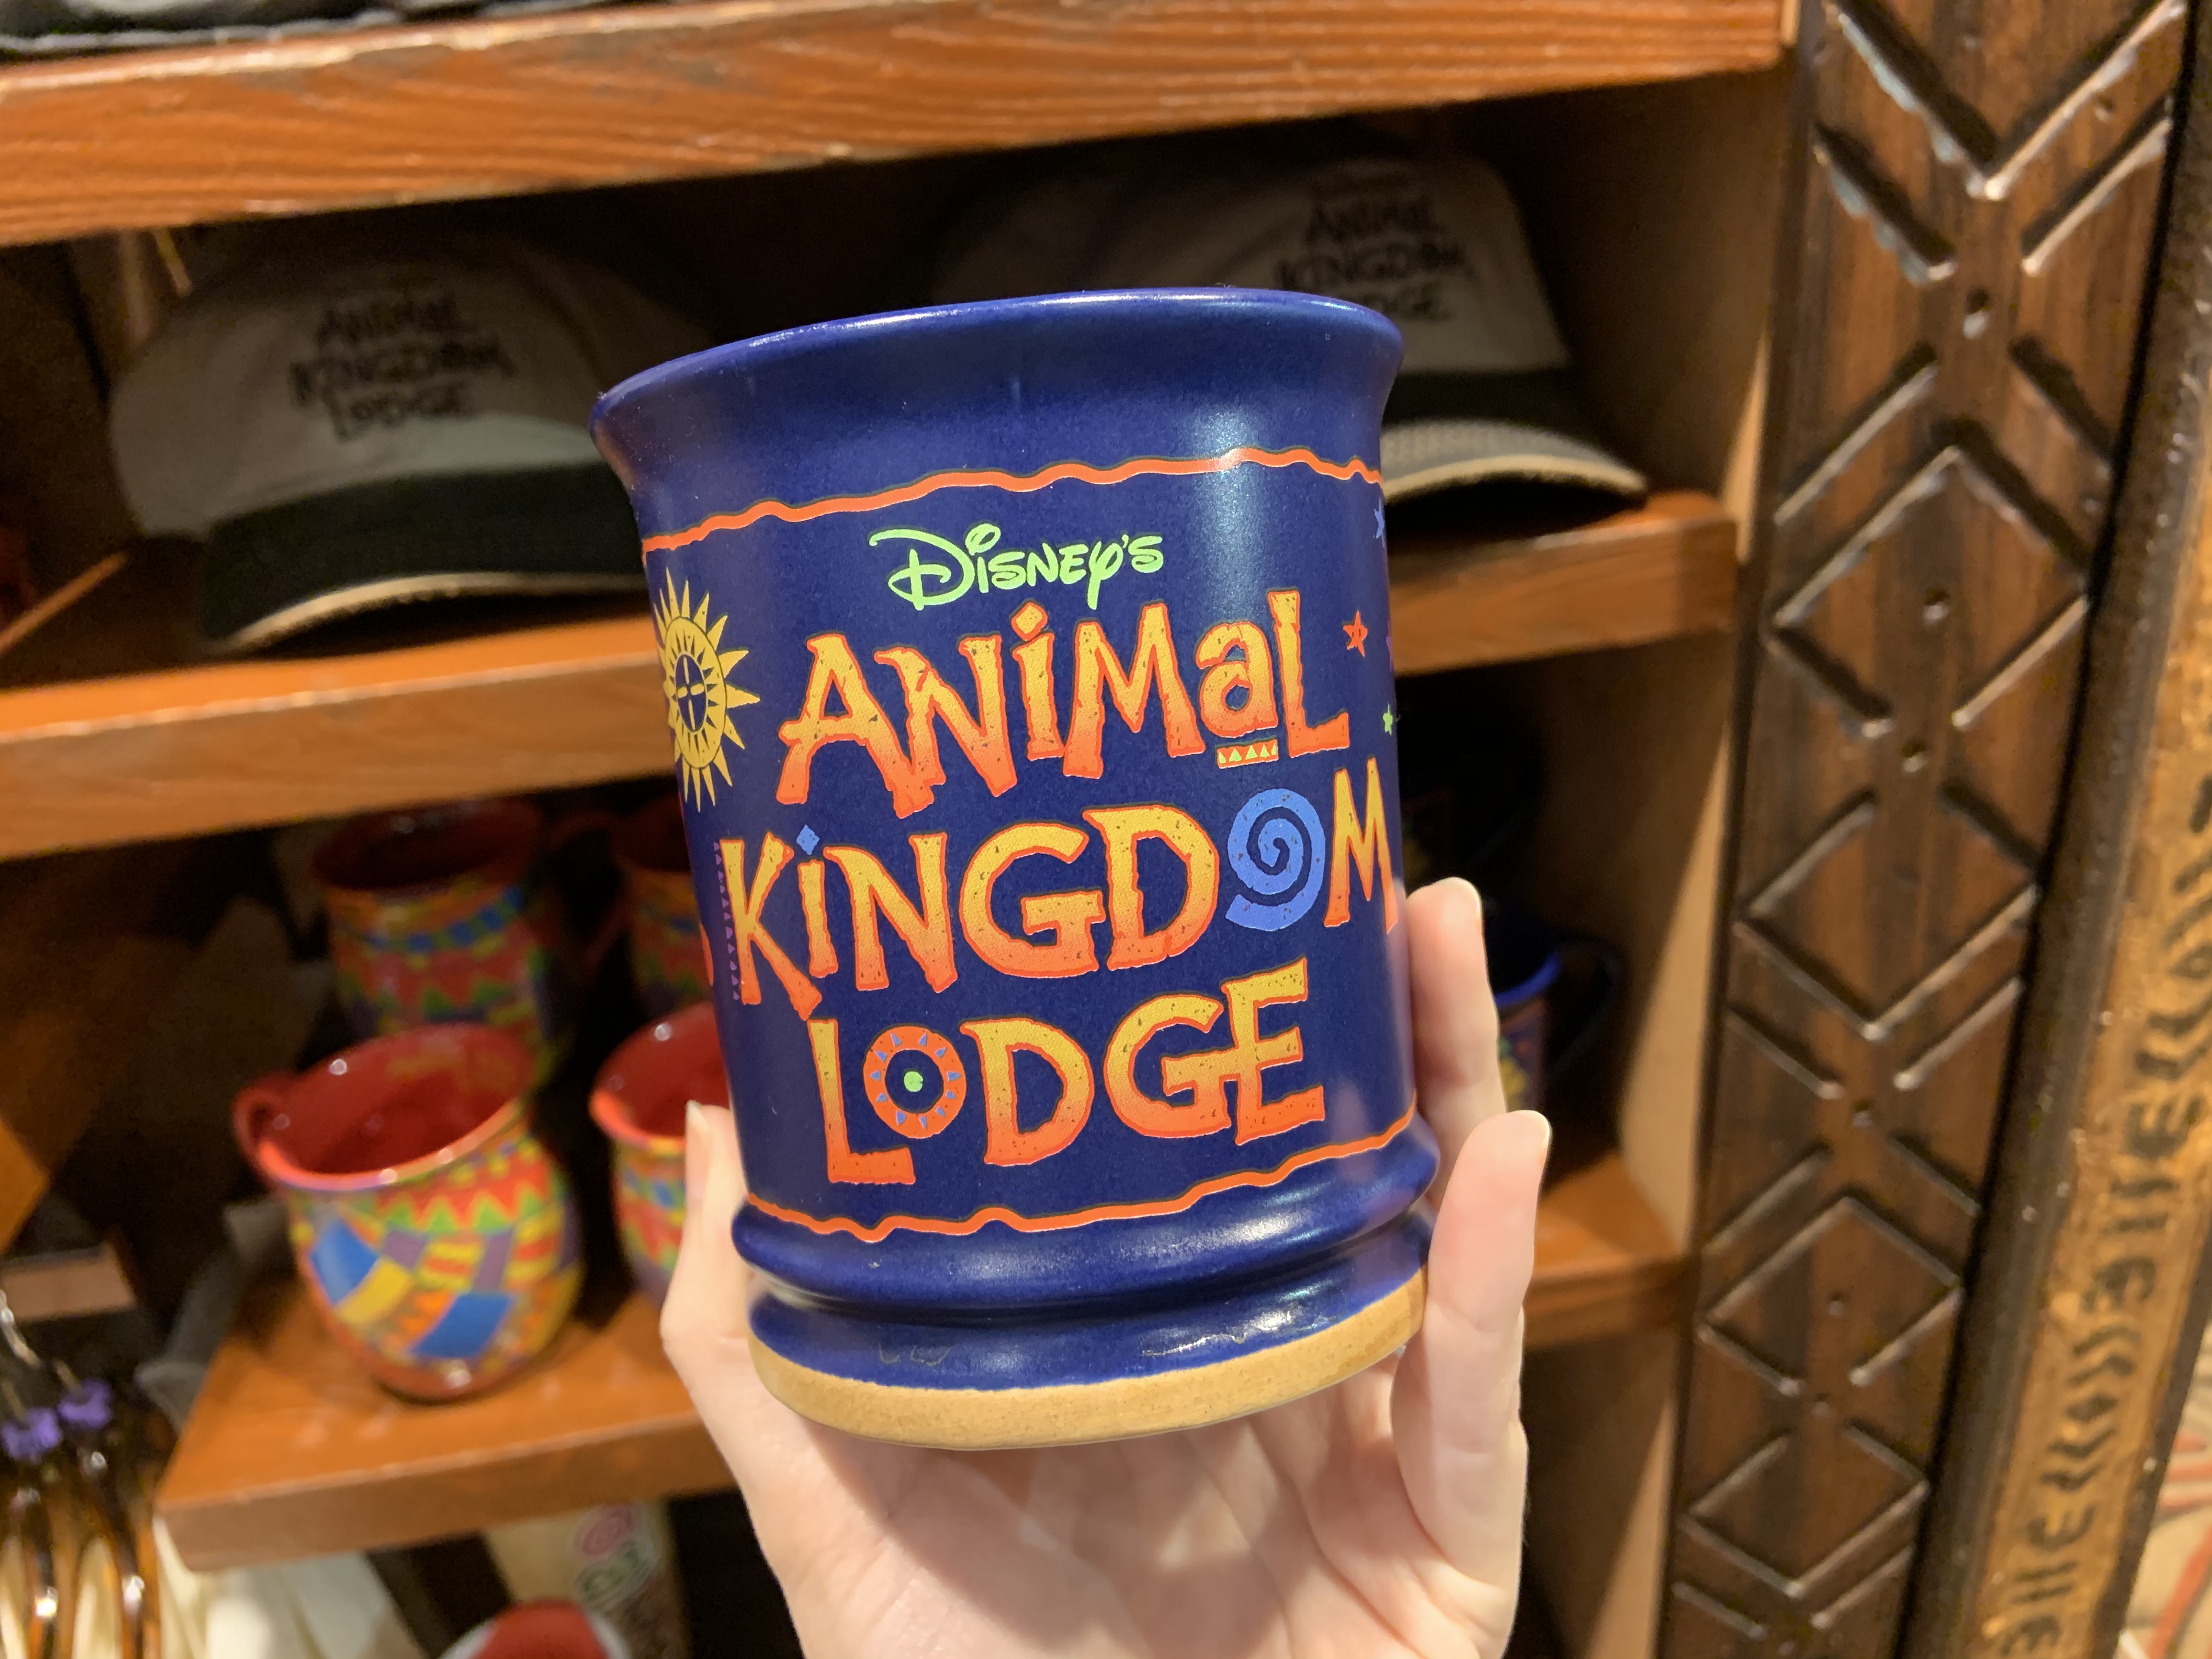 Animal Kingdom Lodge Merchandise 11/25/19 8